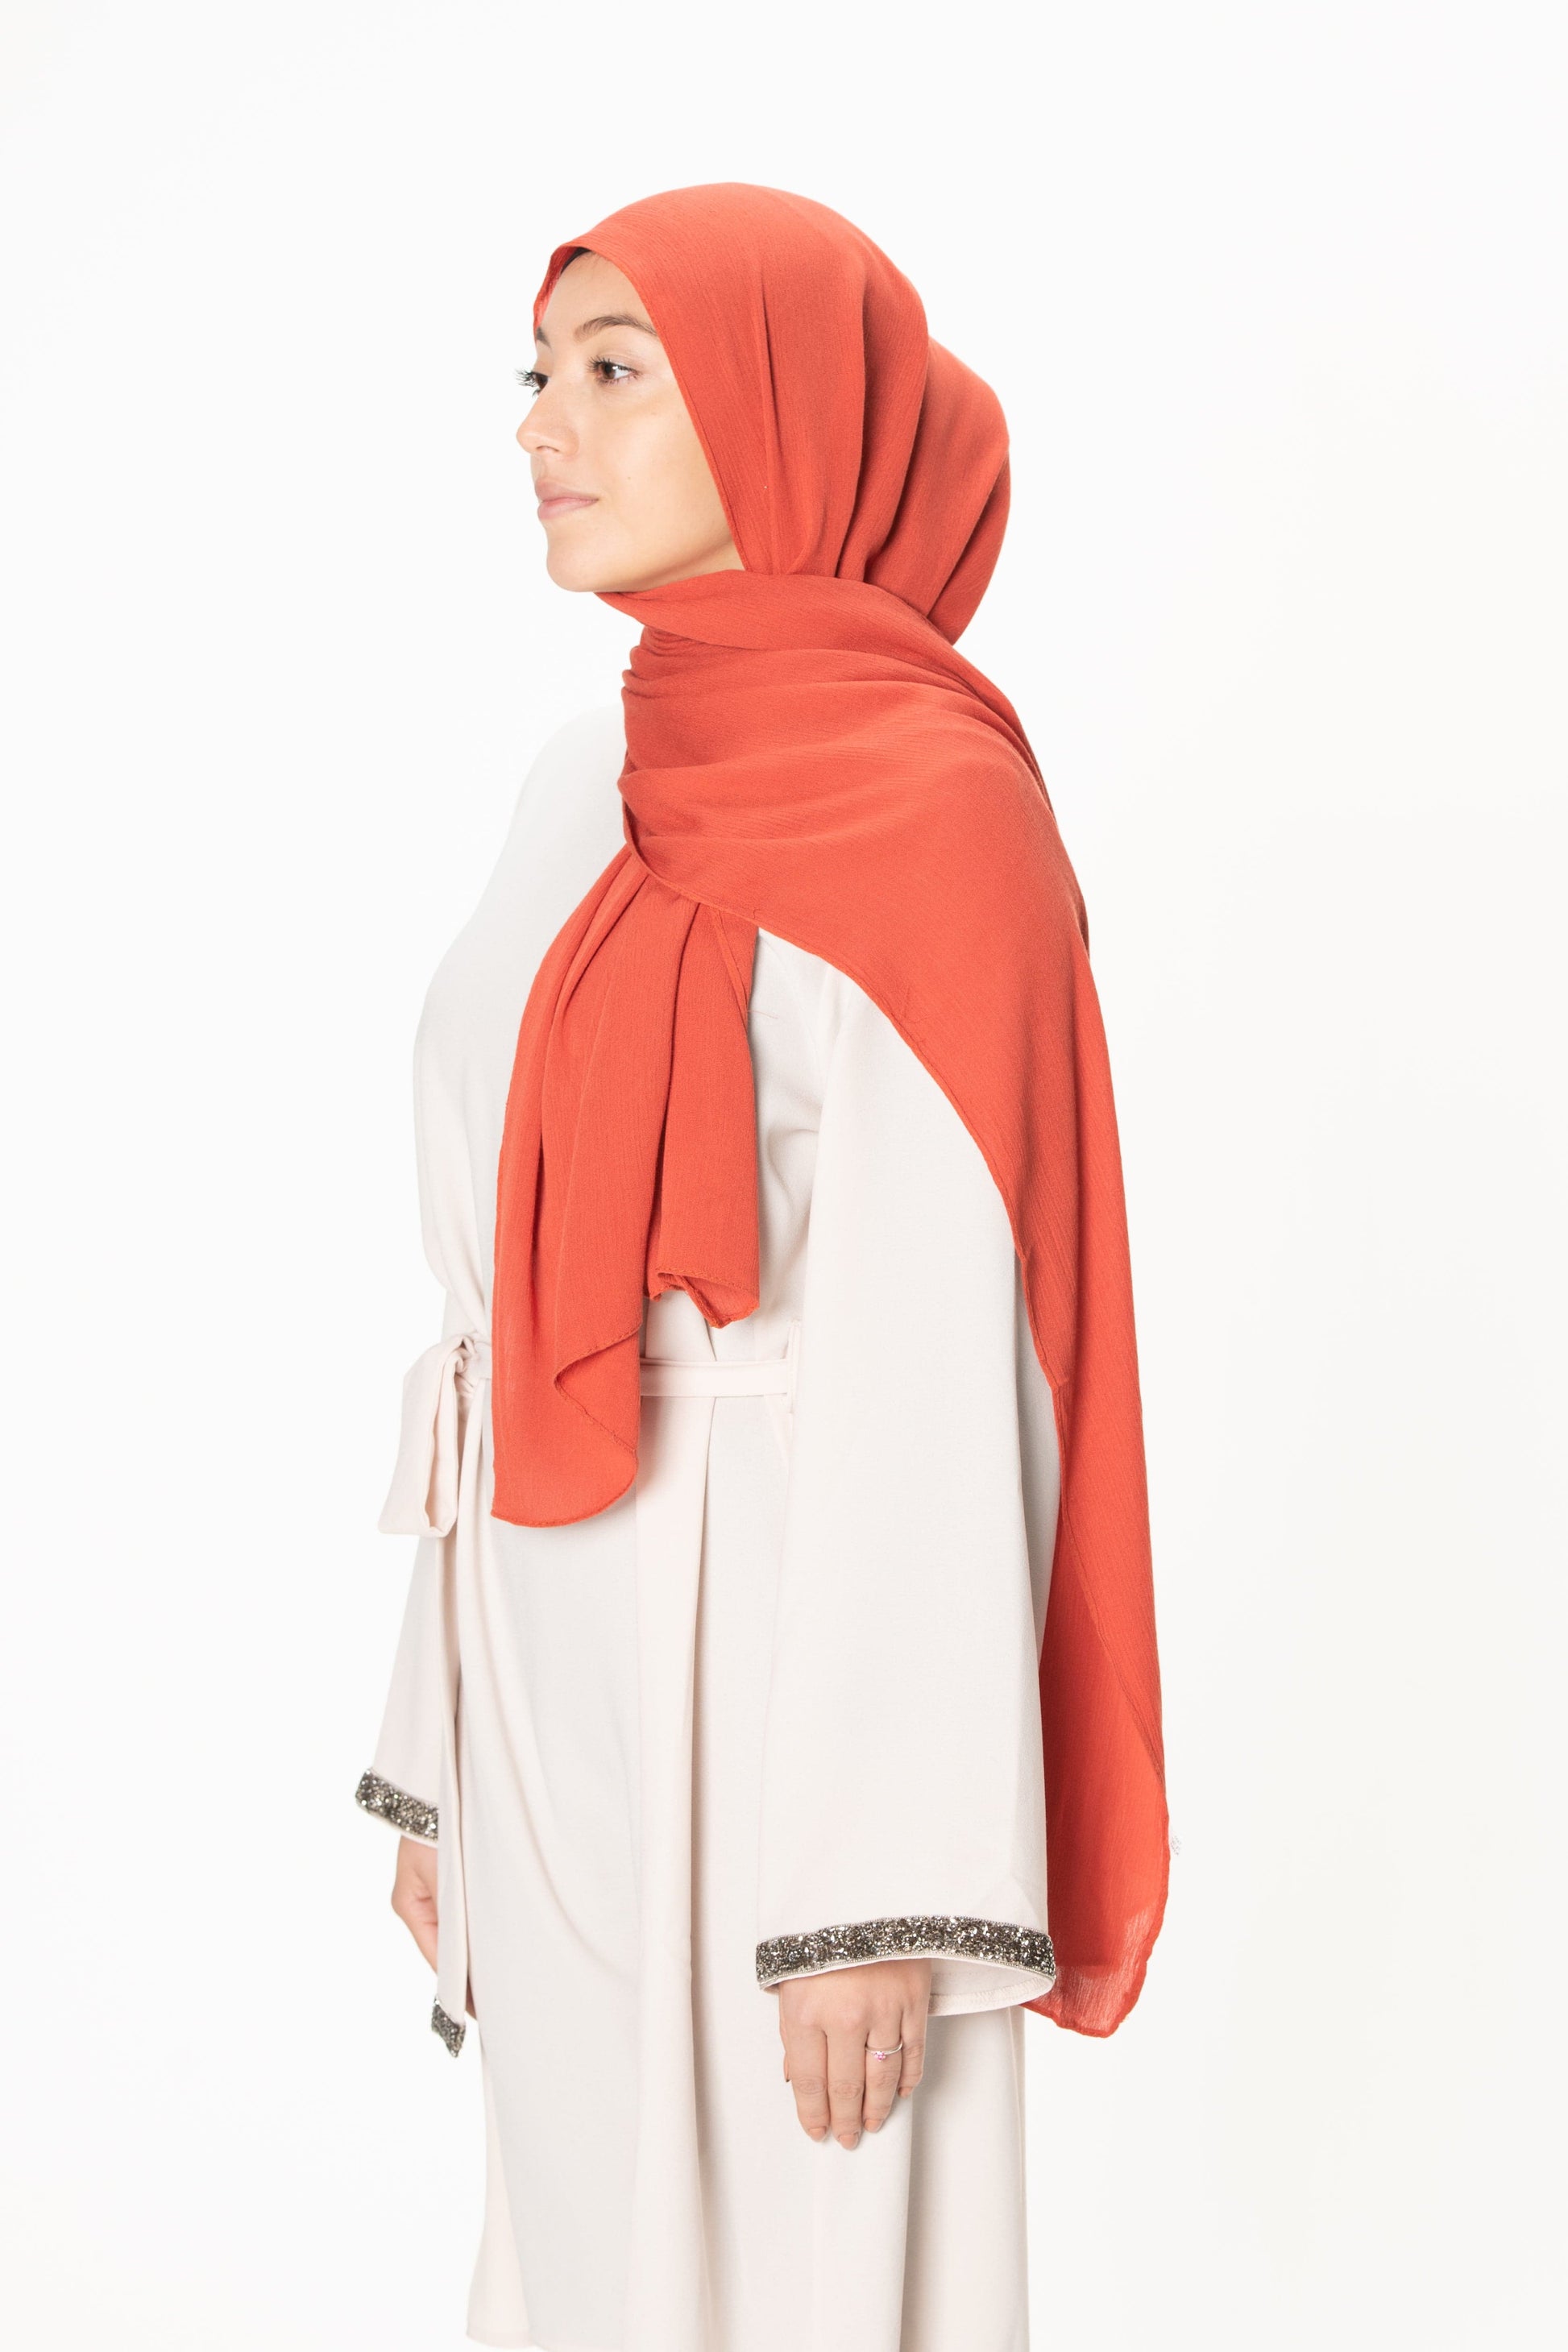 jolienisa Deep Fire Modal Crinkle Hijab